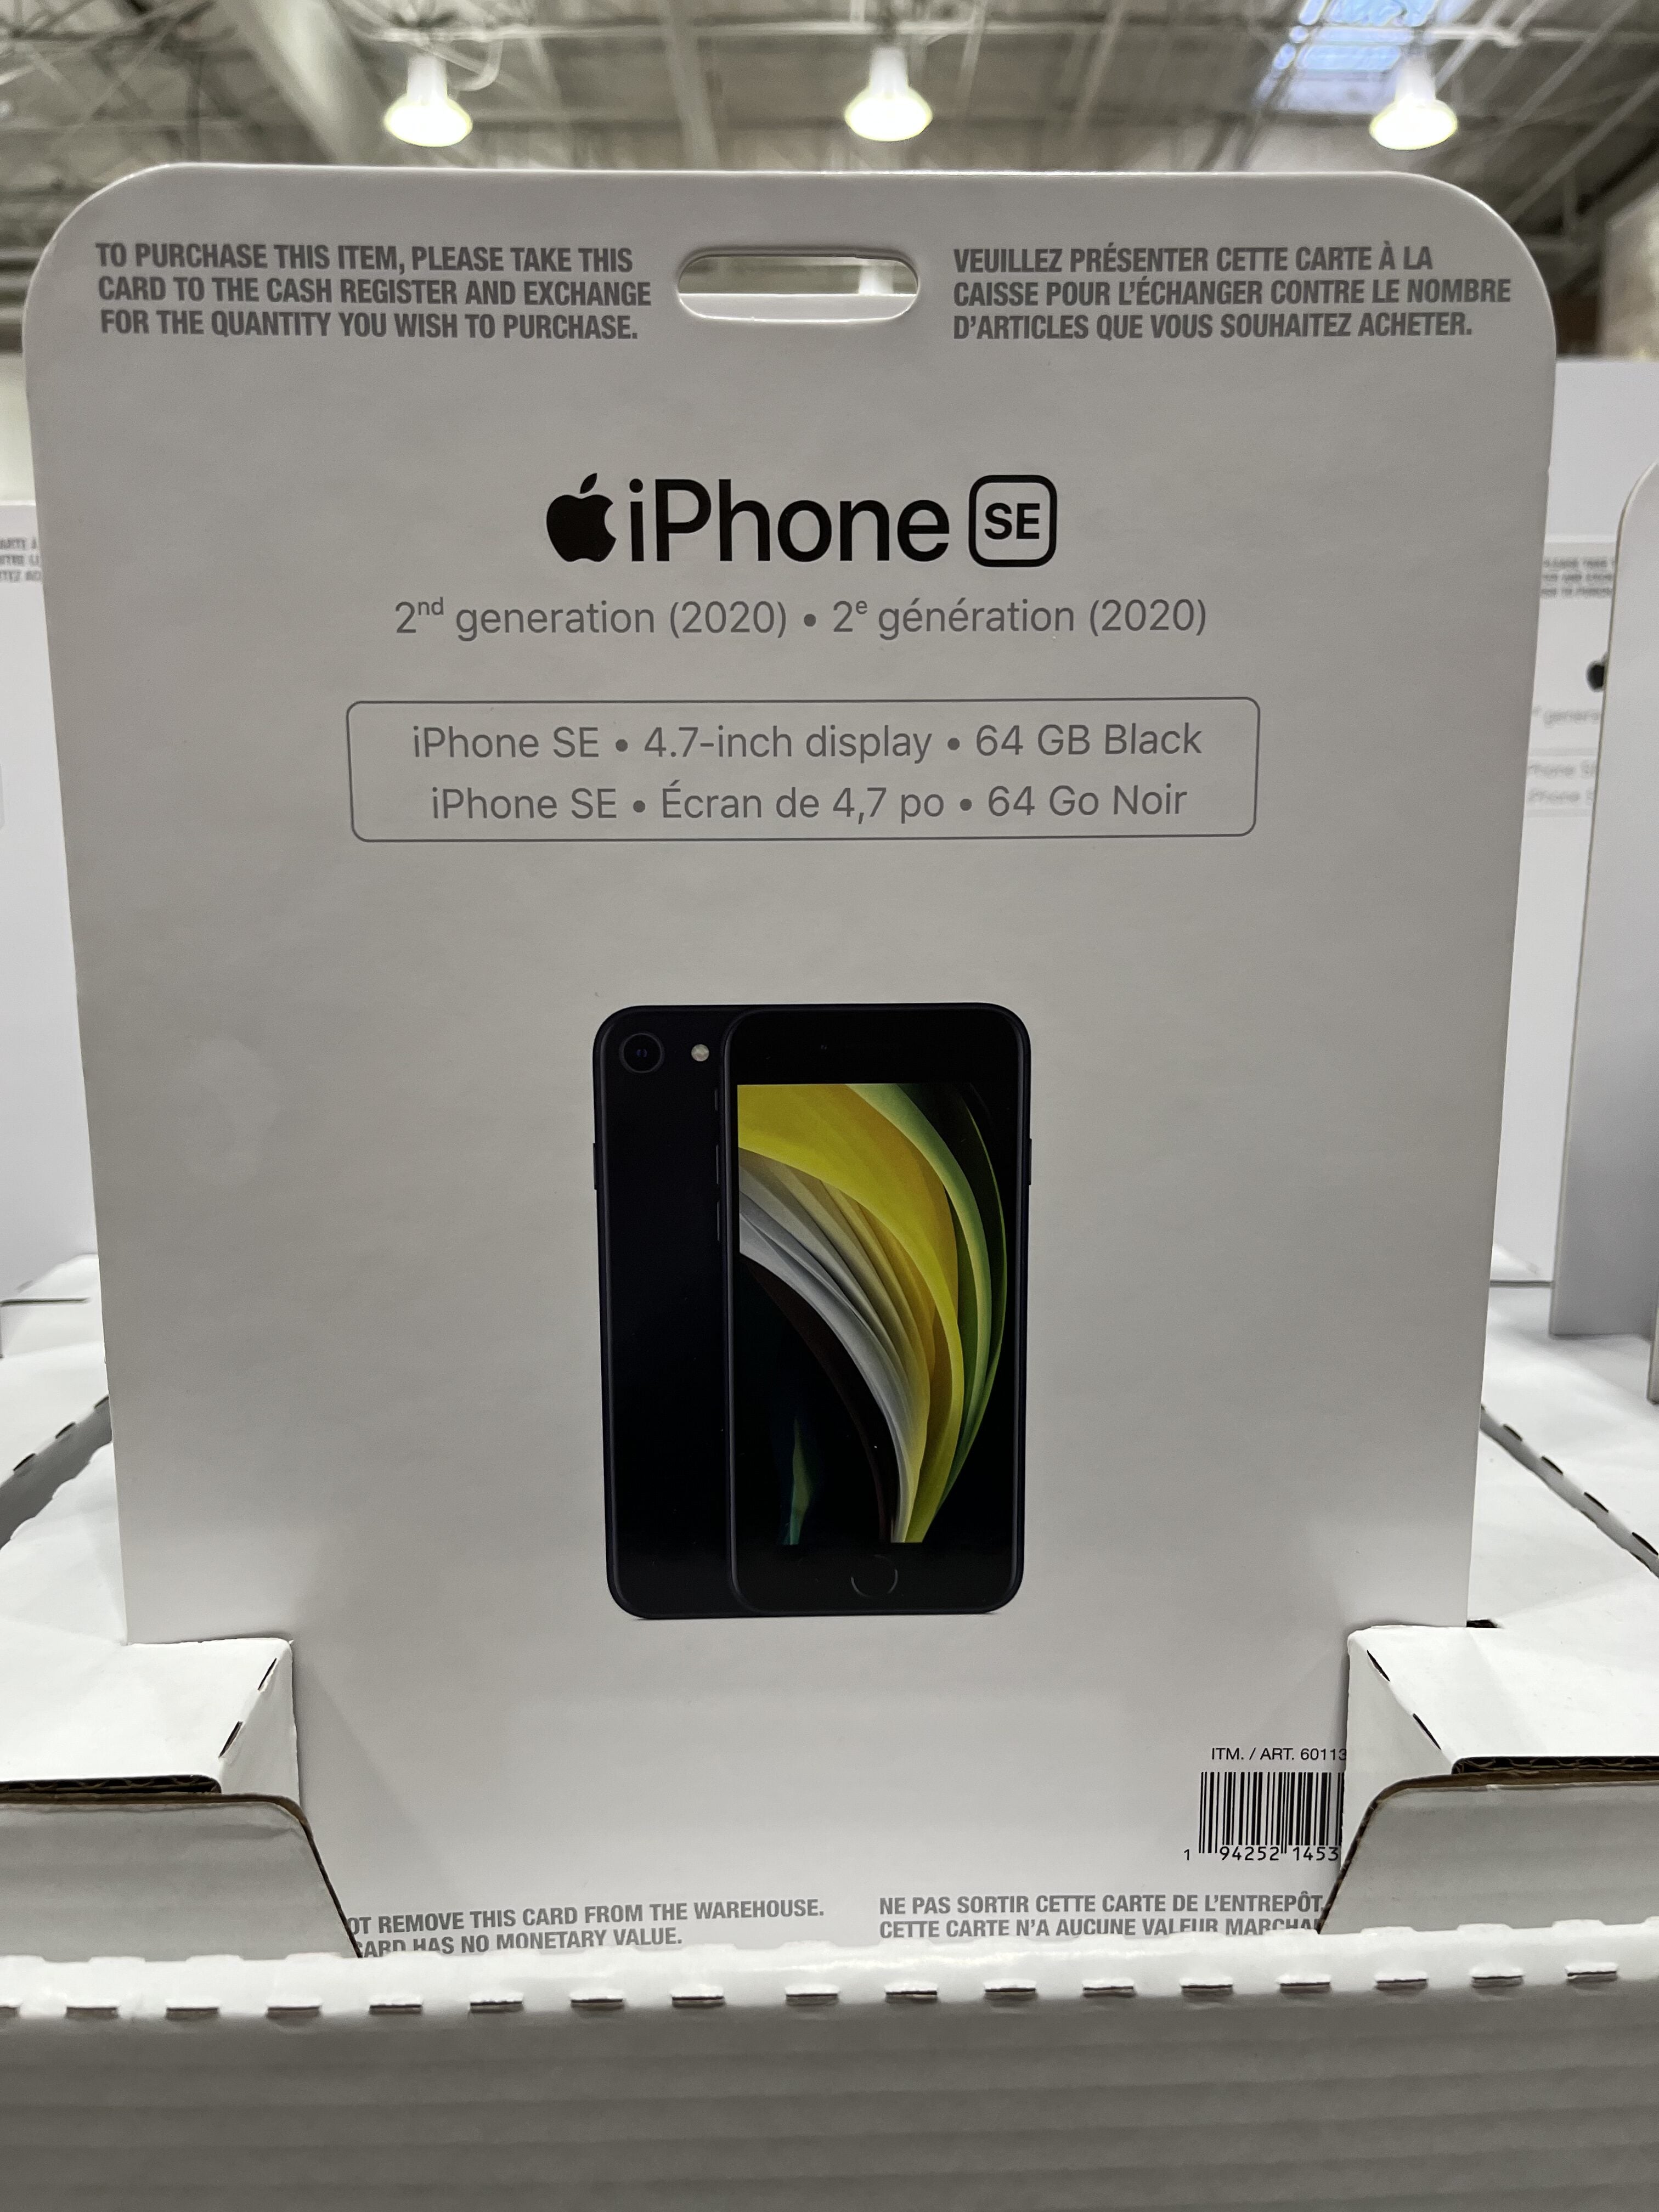 Costco] Apple iPhone SE 2nd Generation (2020) 64 GB $399.99 